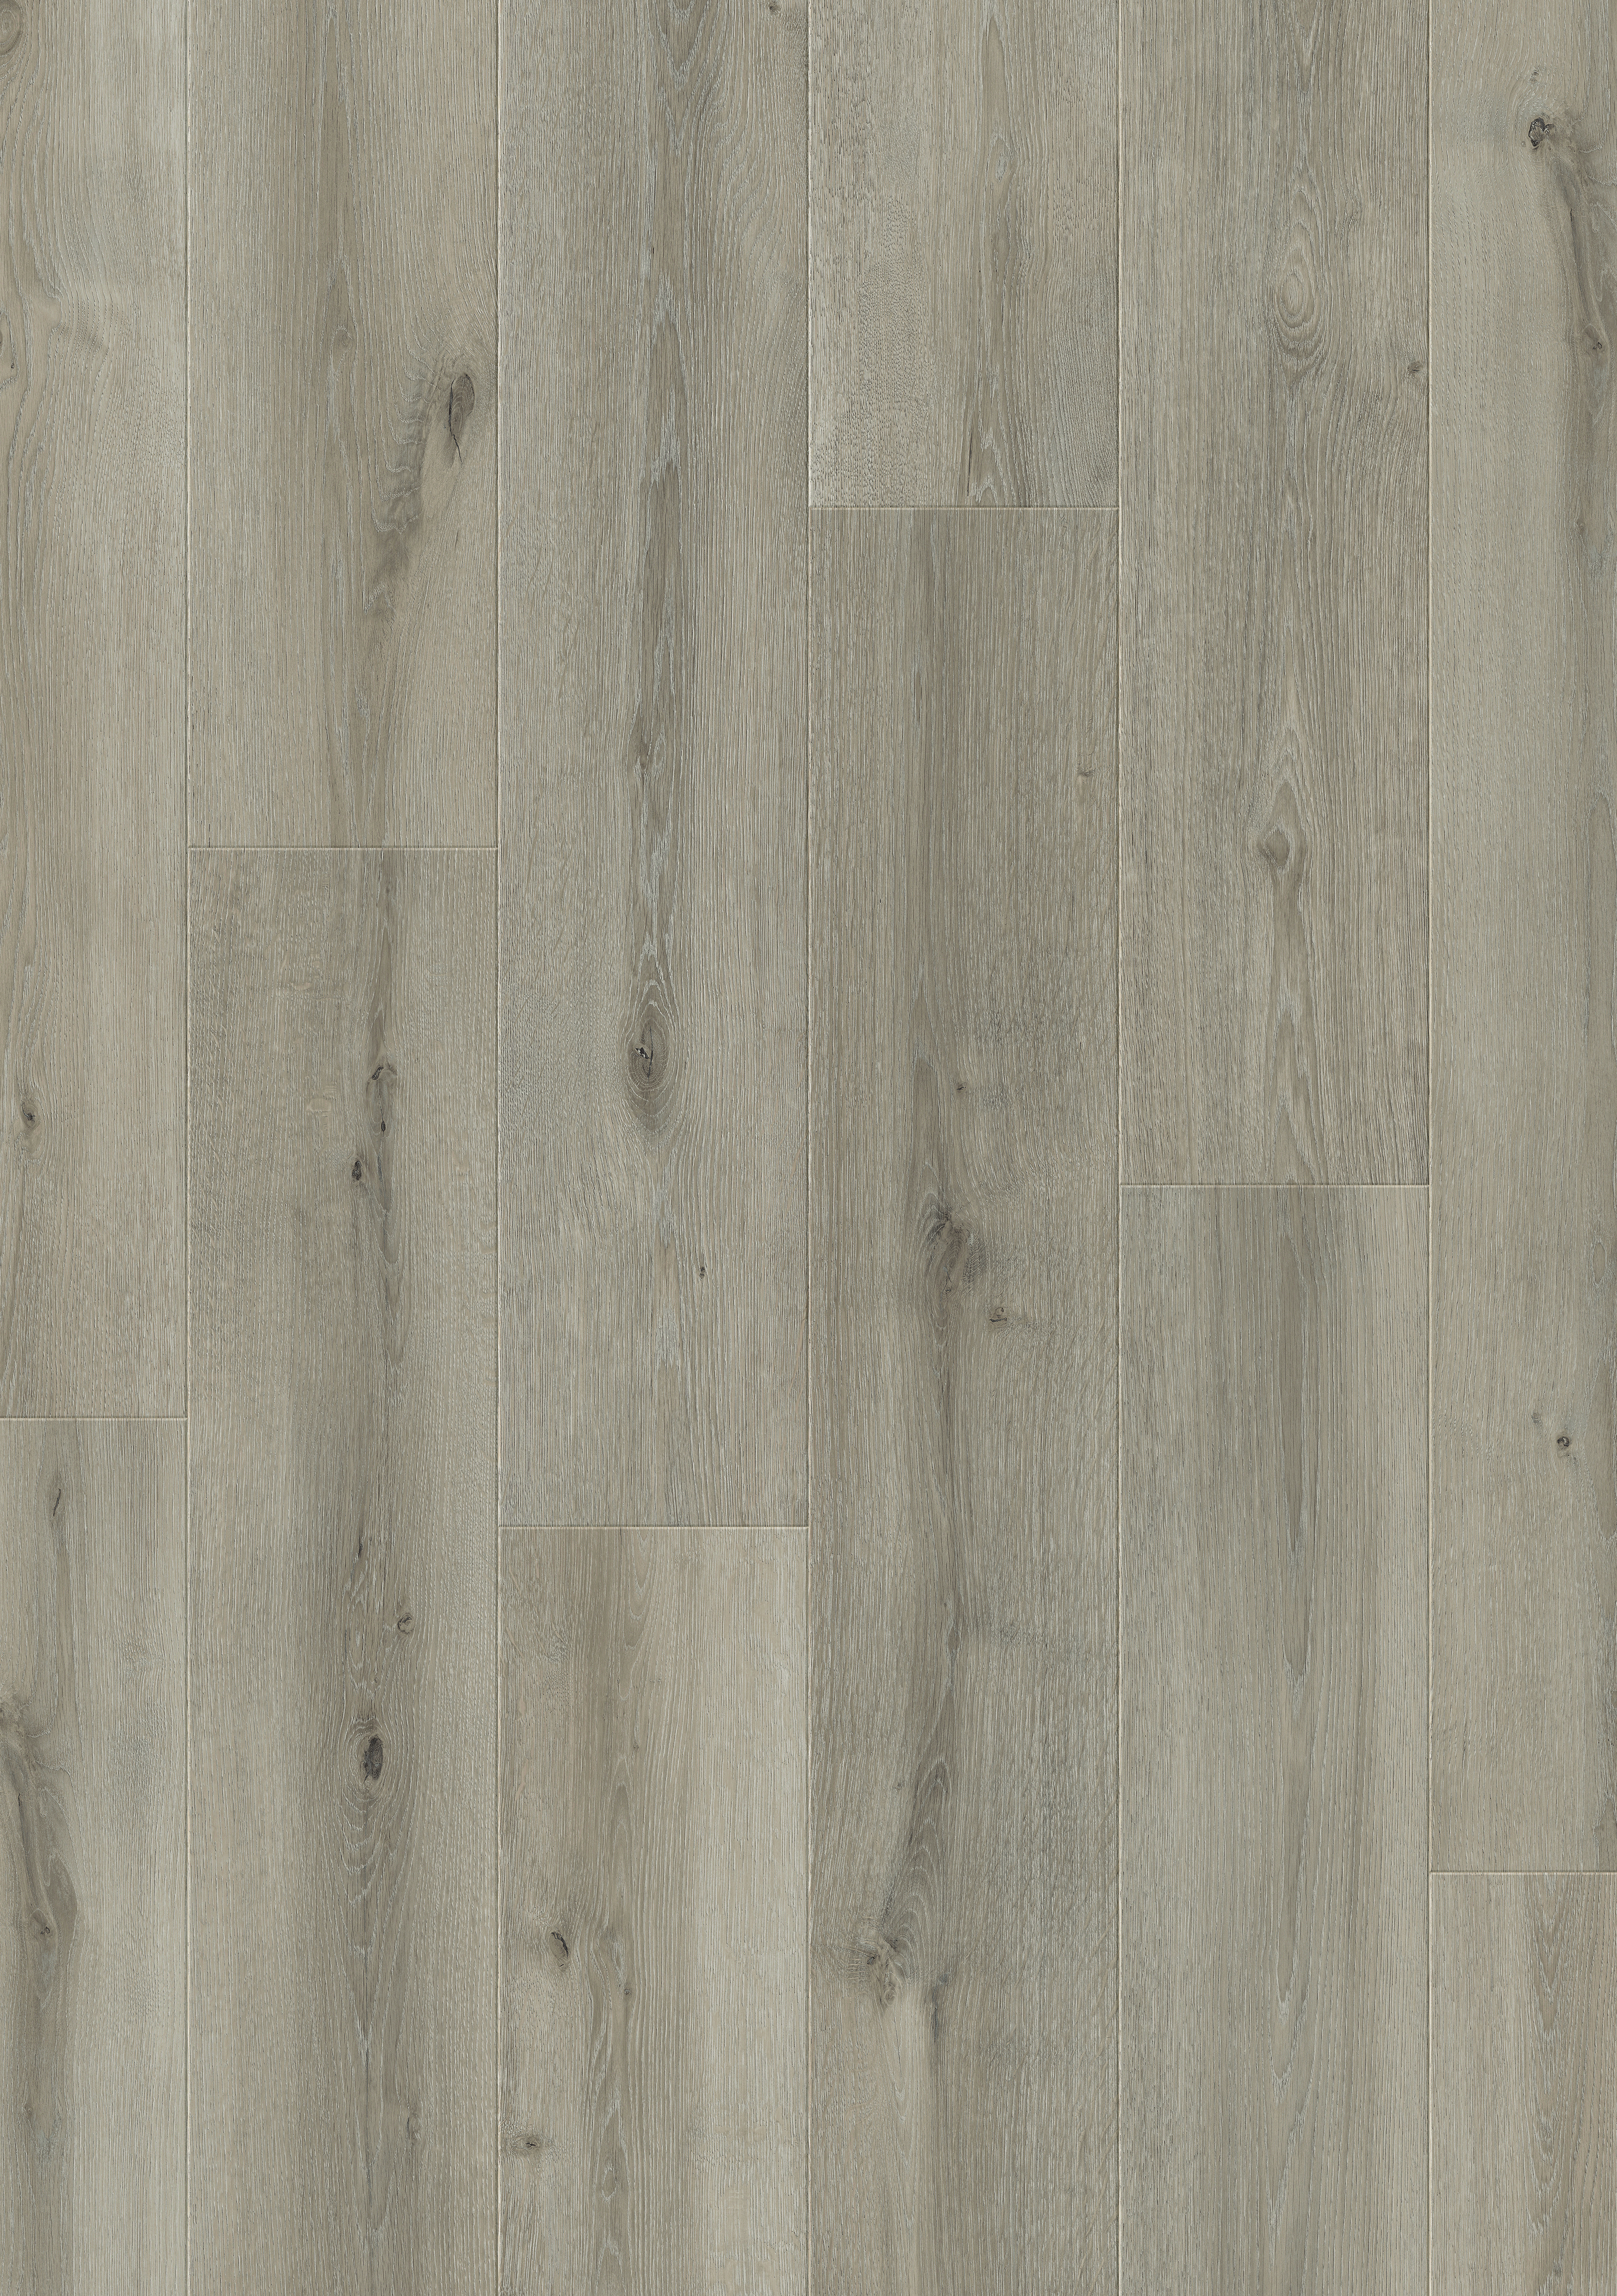 Quick-Step Salto Mayfair Light Grey Oak 8mm Laminate Flooring - Sample